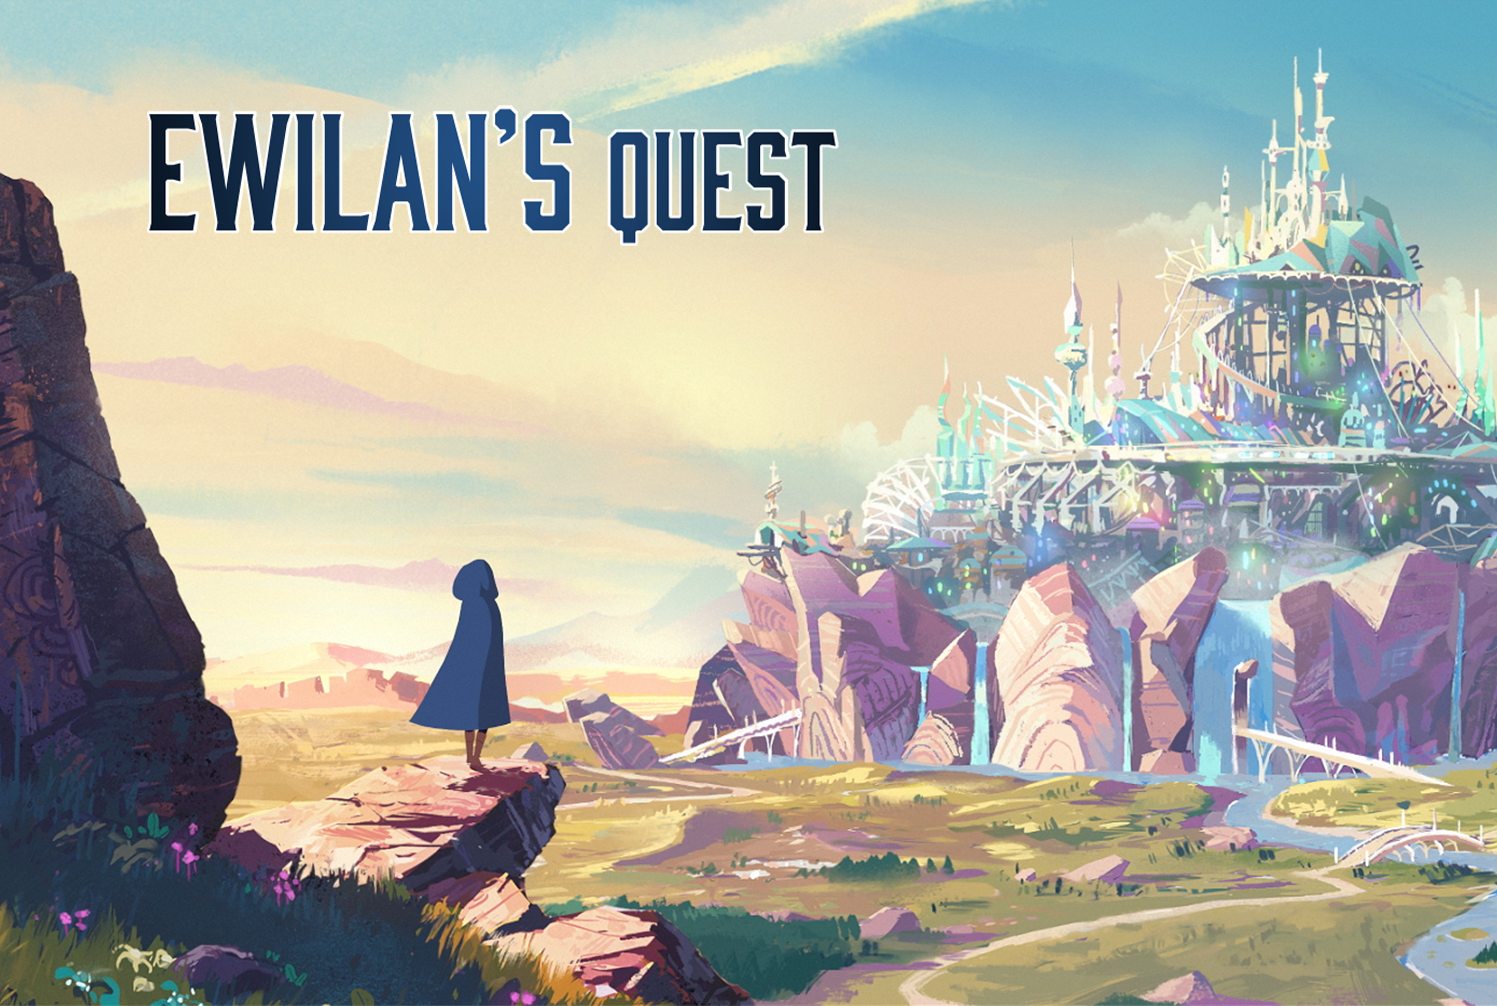 Ewilan’s Quest